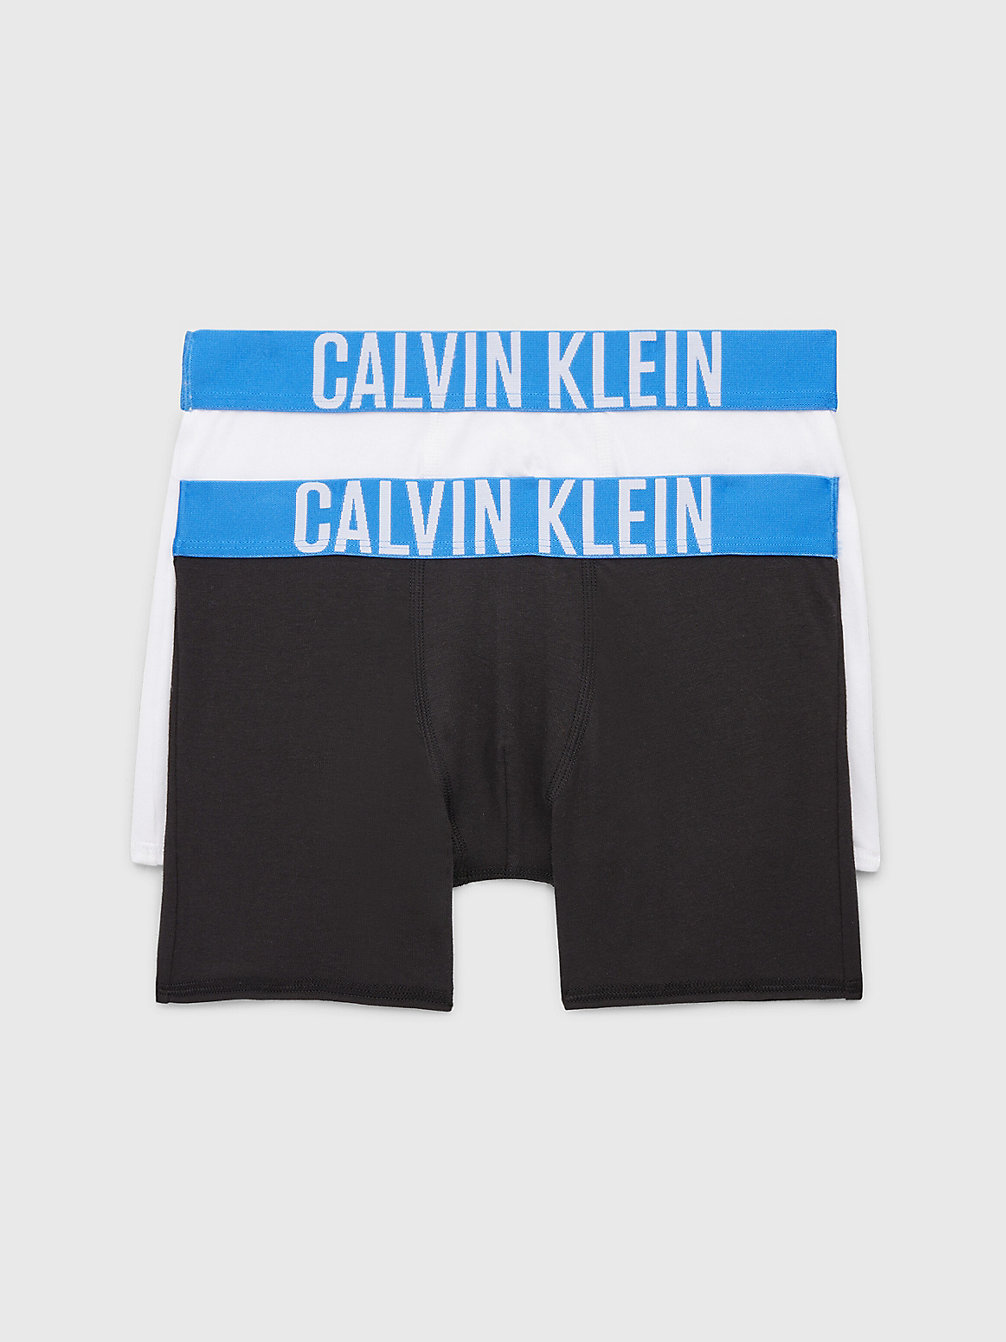 PVHBLACK/PVHWHITE 2 Pack Boys Boxer Briefs - Intense Power undefined boys Calvin Klein